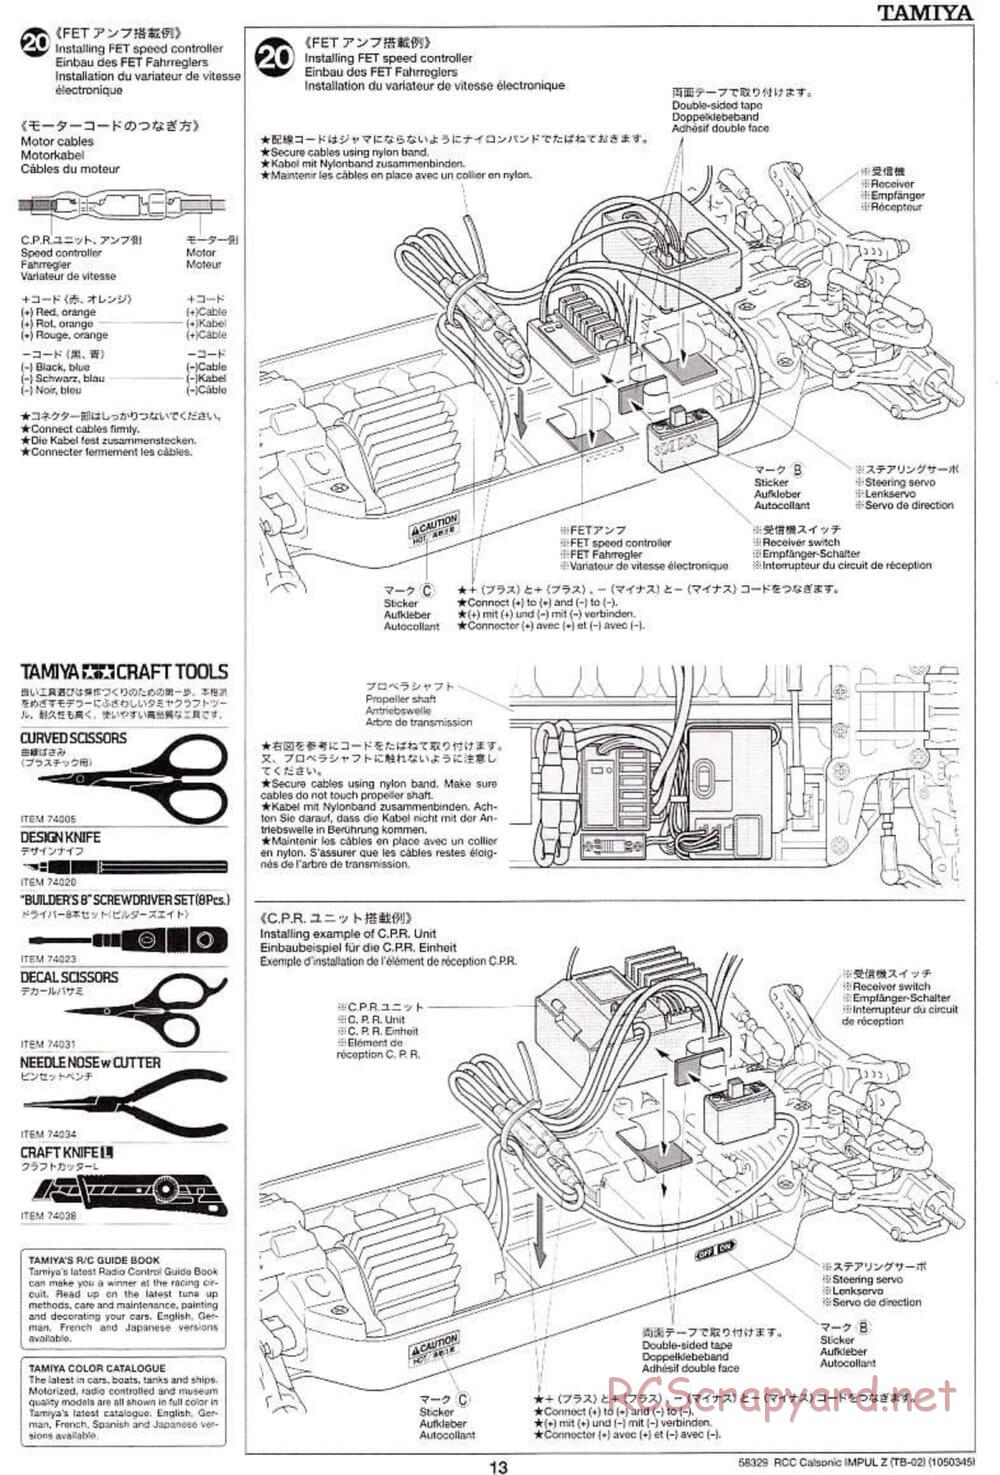 Tamiya - Calsonic Impul Z - TB-02 Chassis - Manual - Page 13